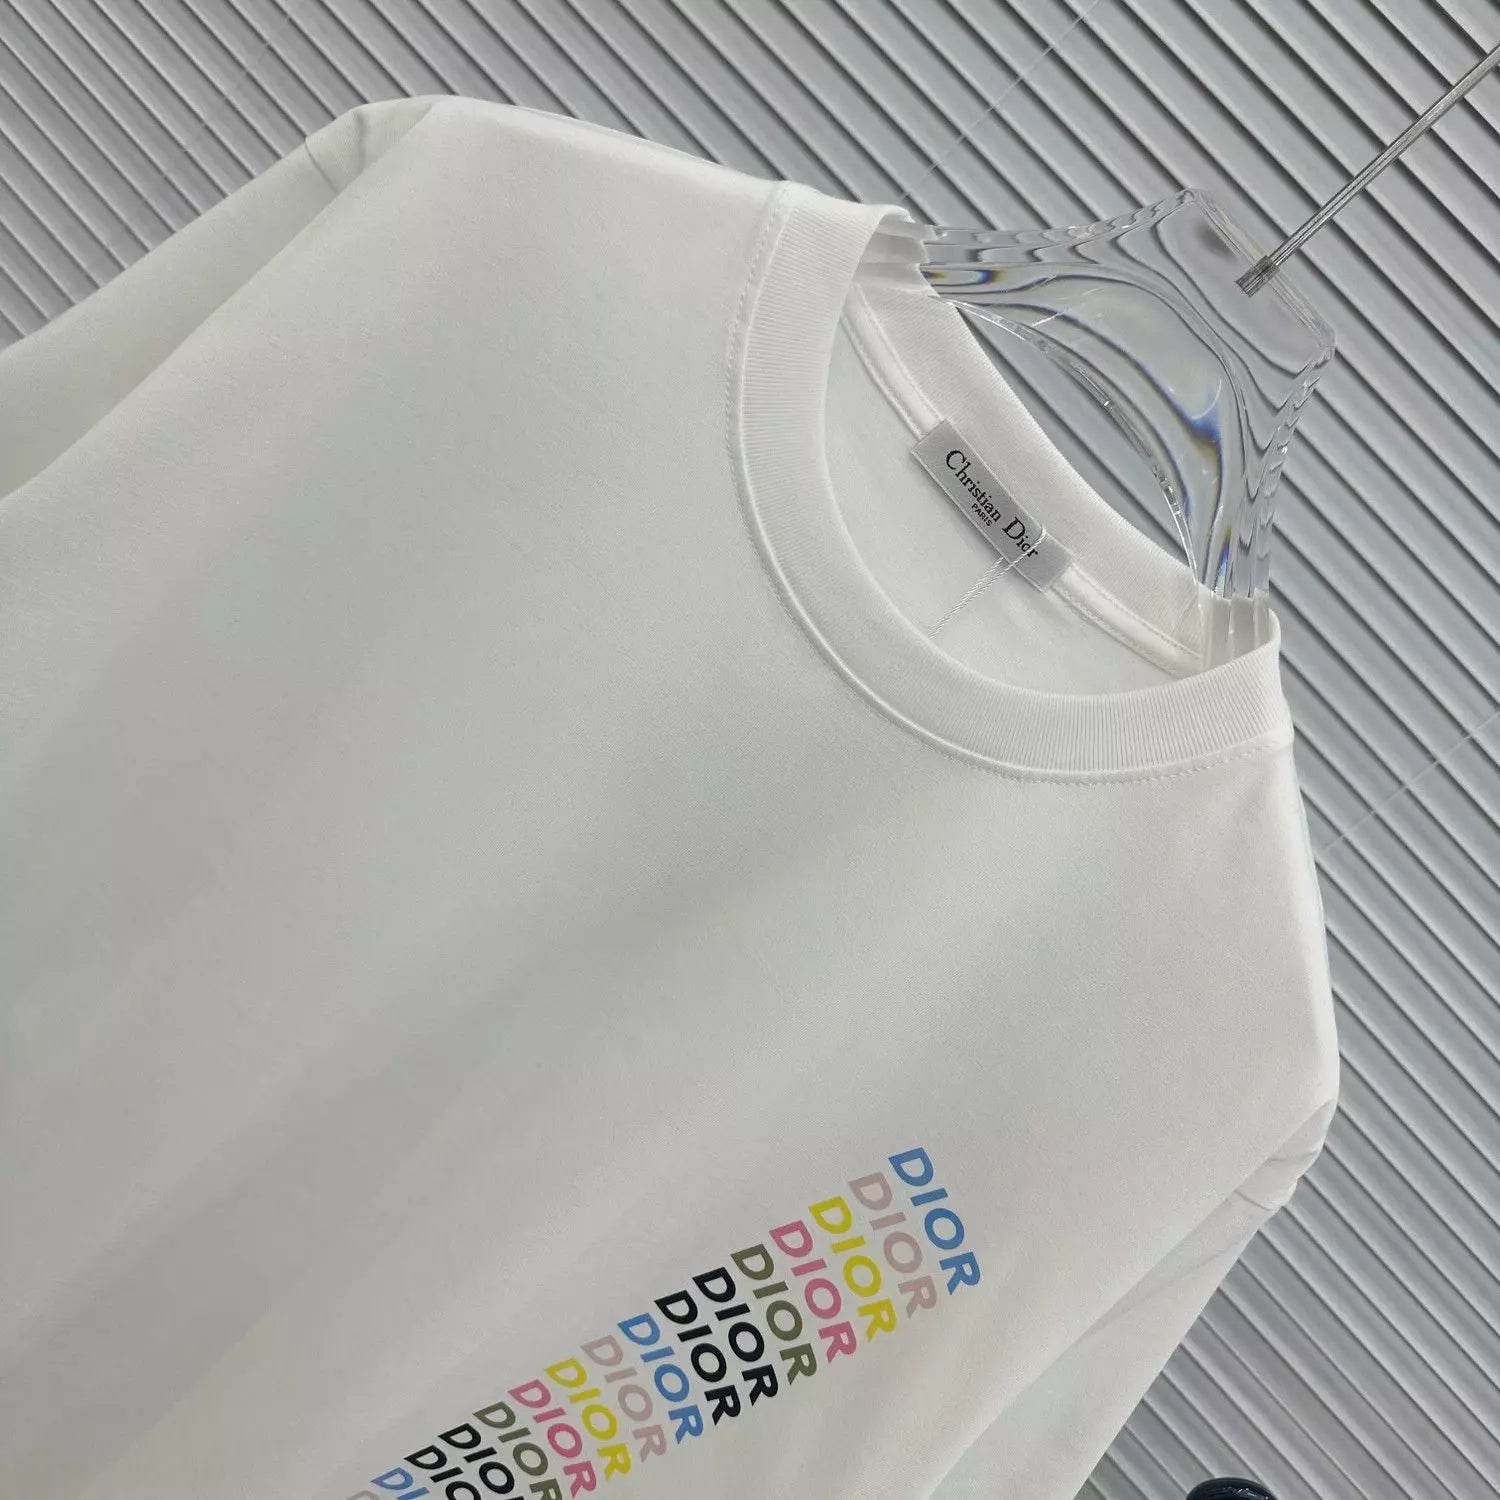 Camiseta CHRISTIAN DIOR Multi Color Logo Branco